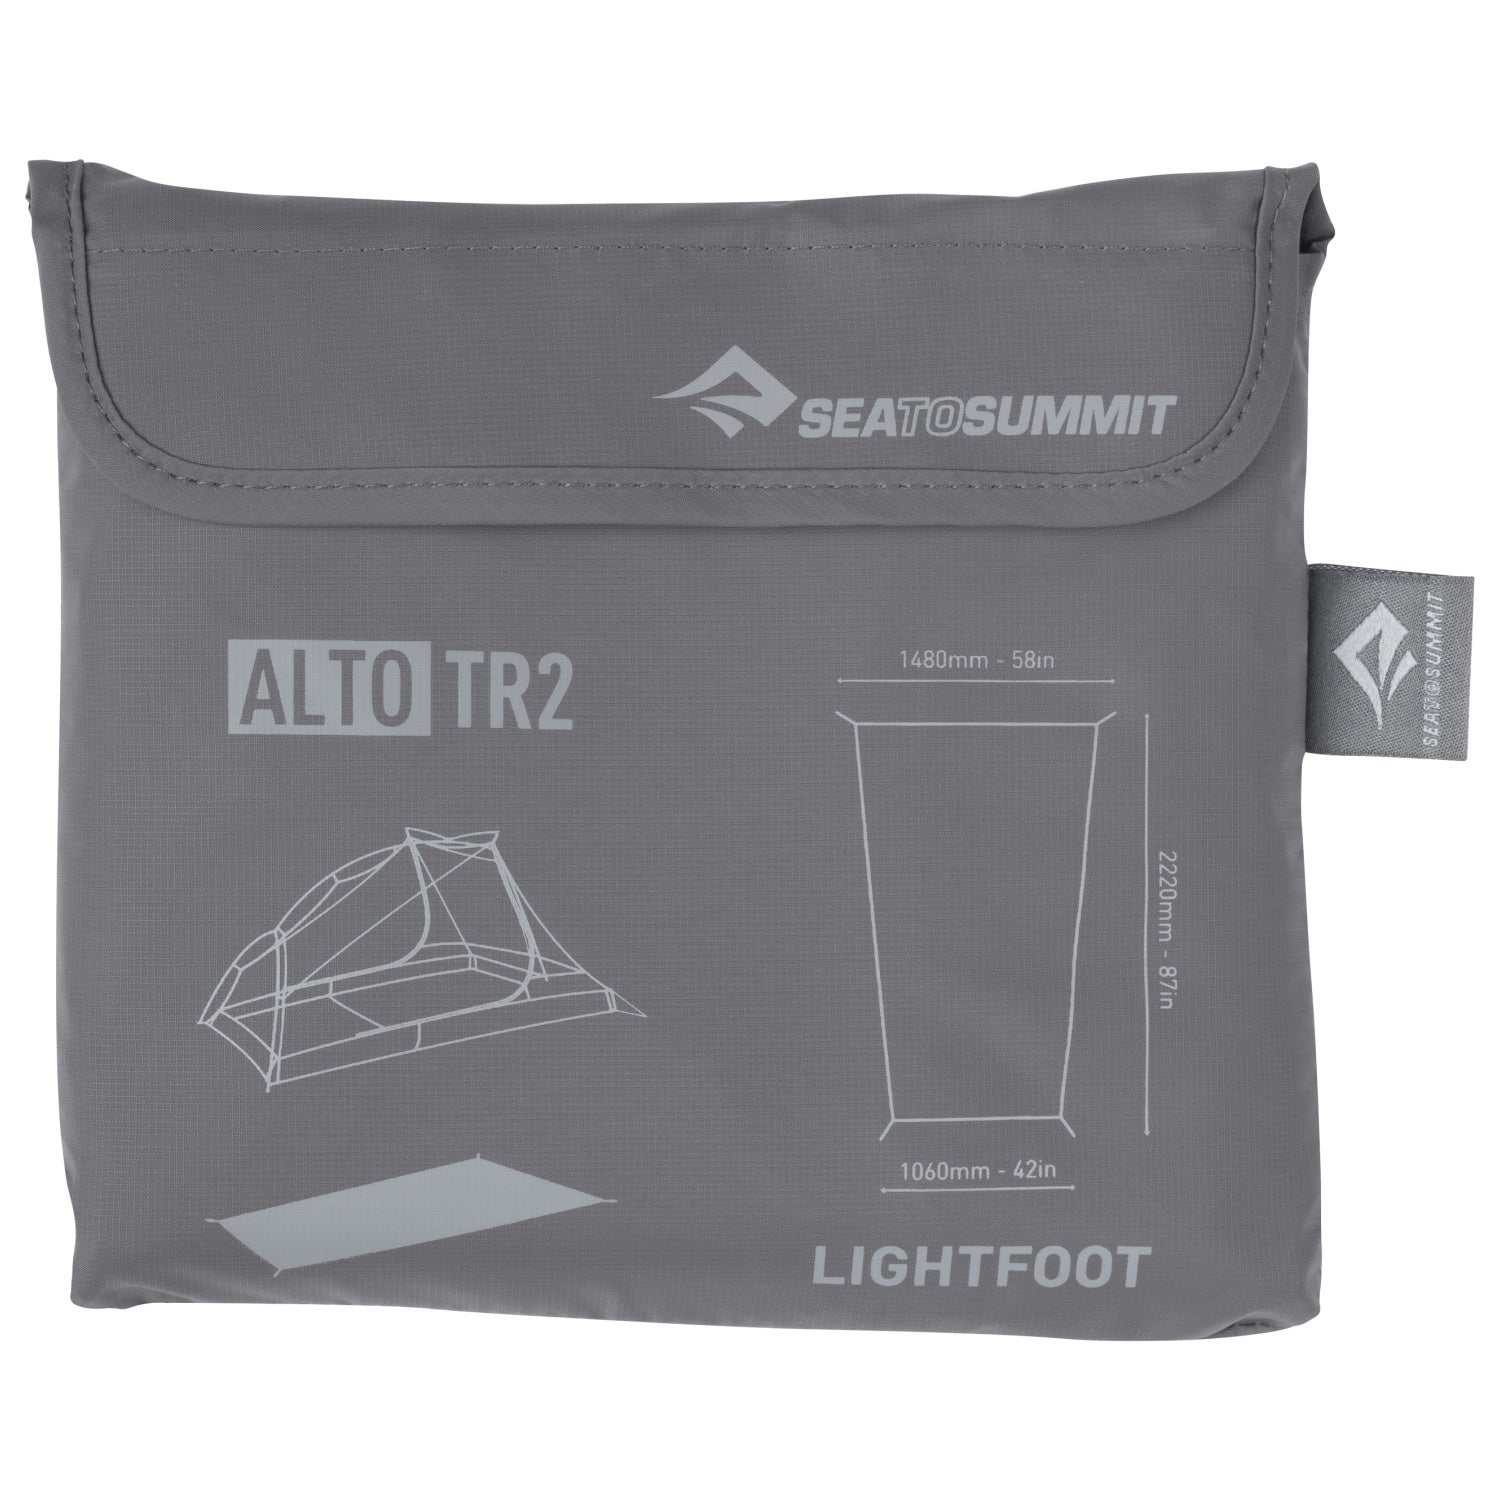 AltoTR2 Lightfoot Groundsheet